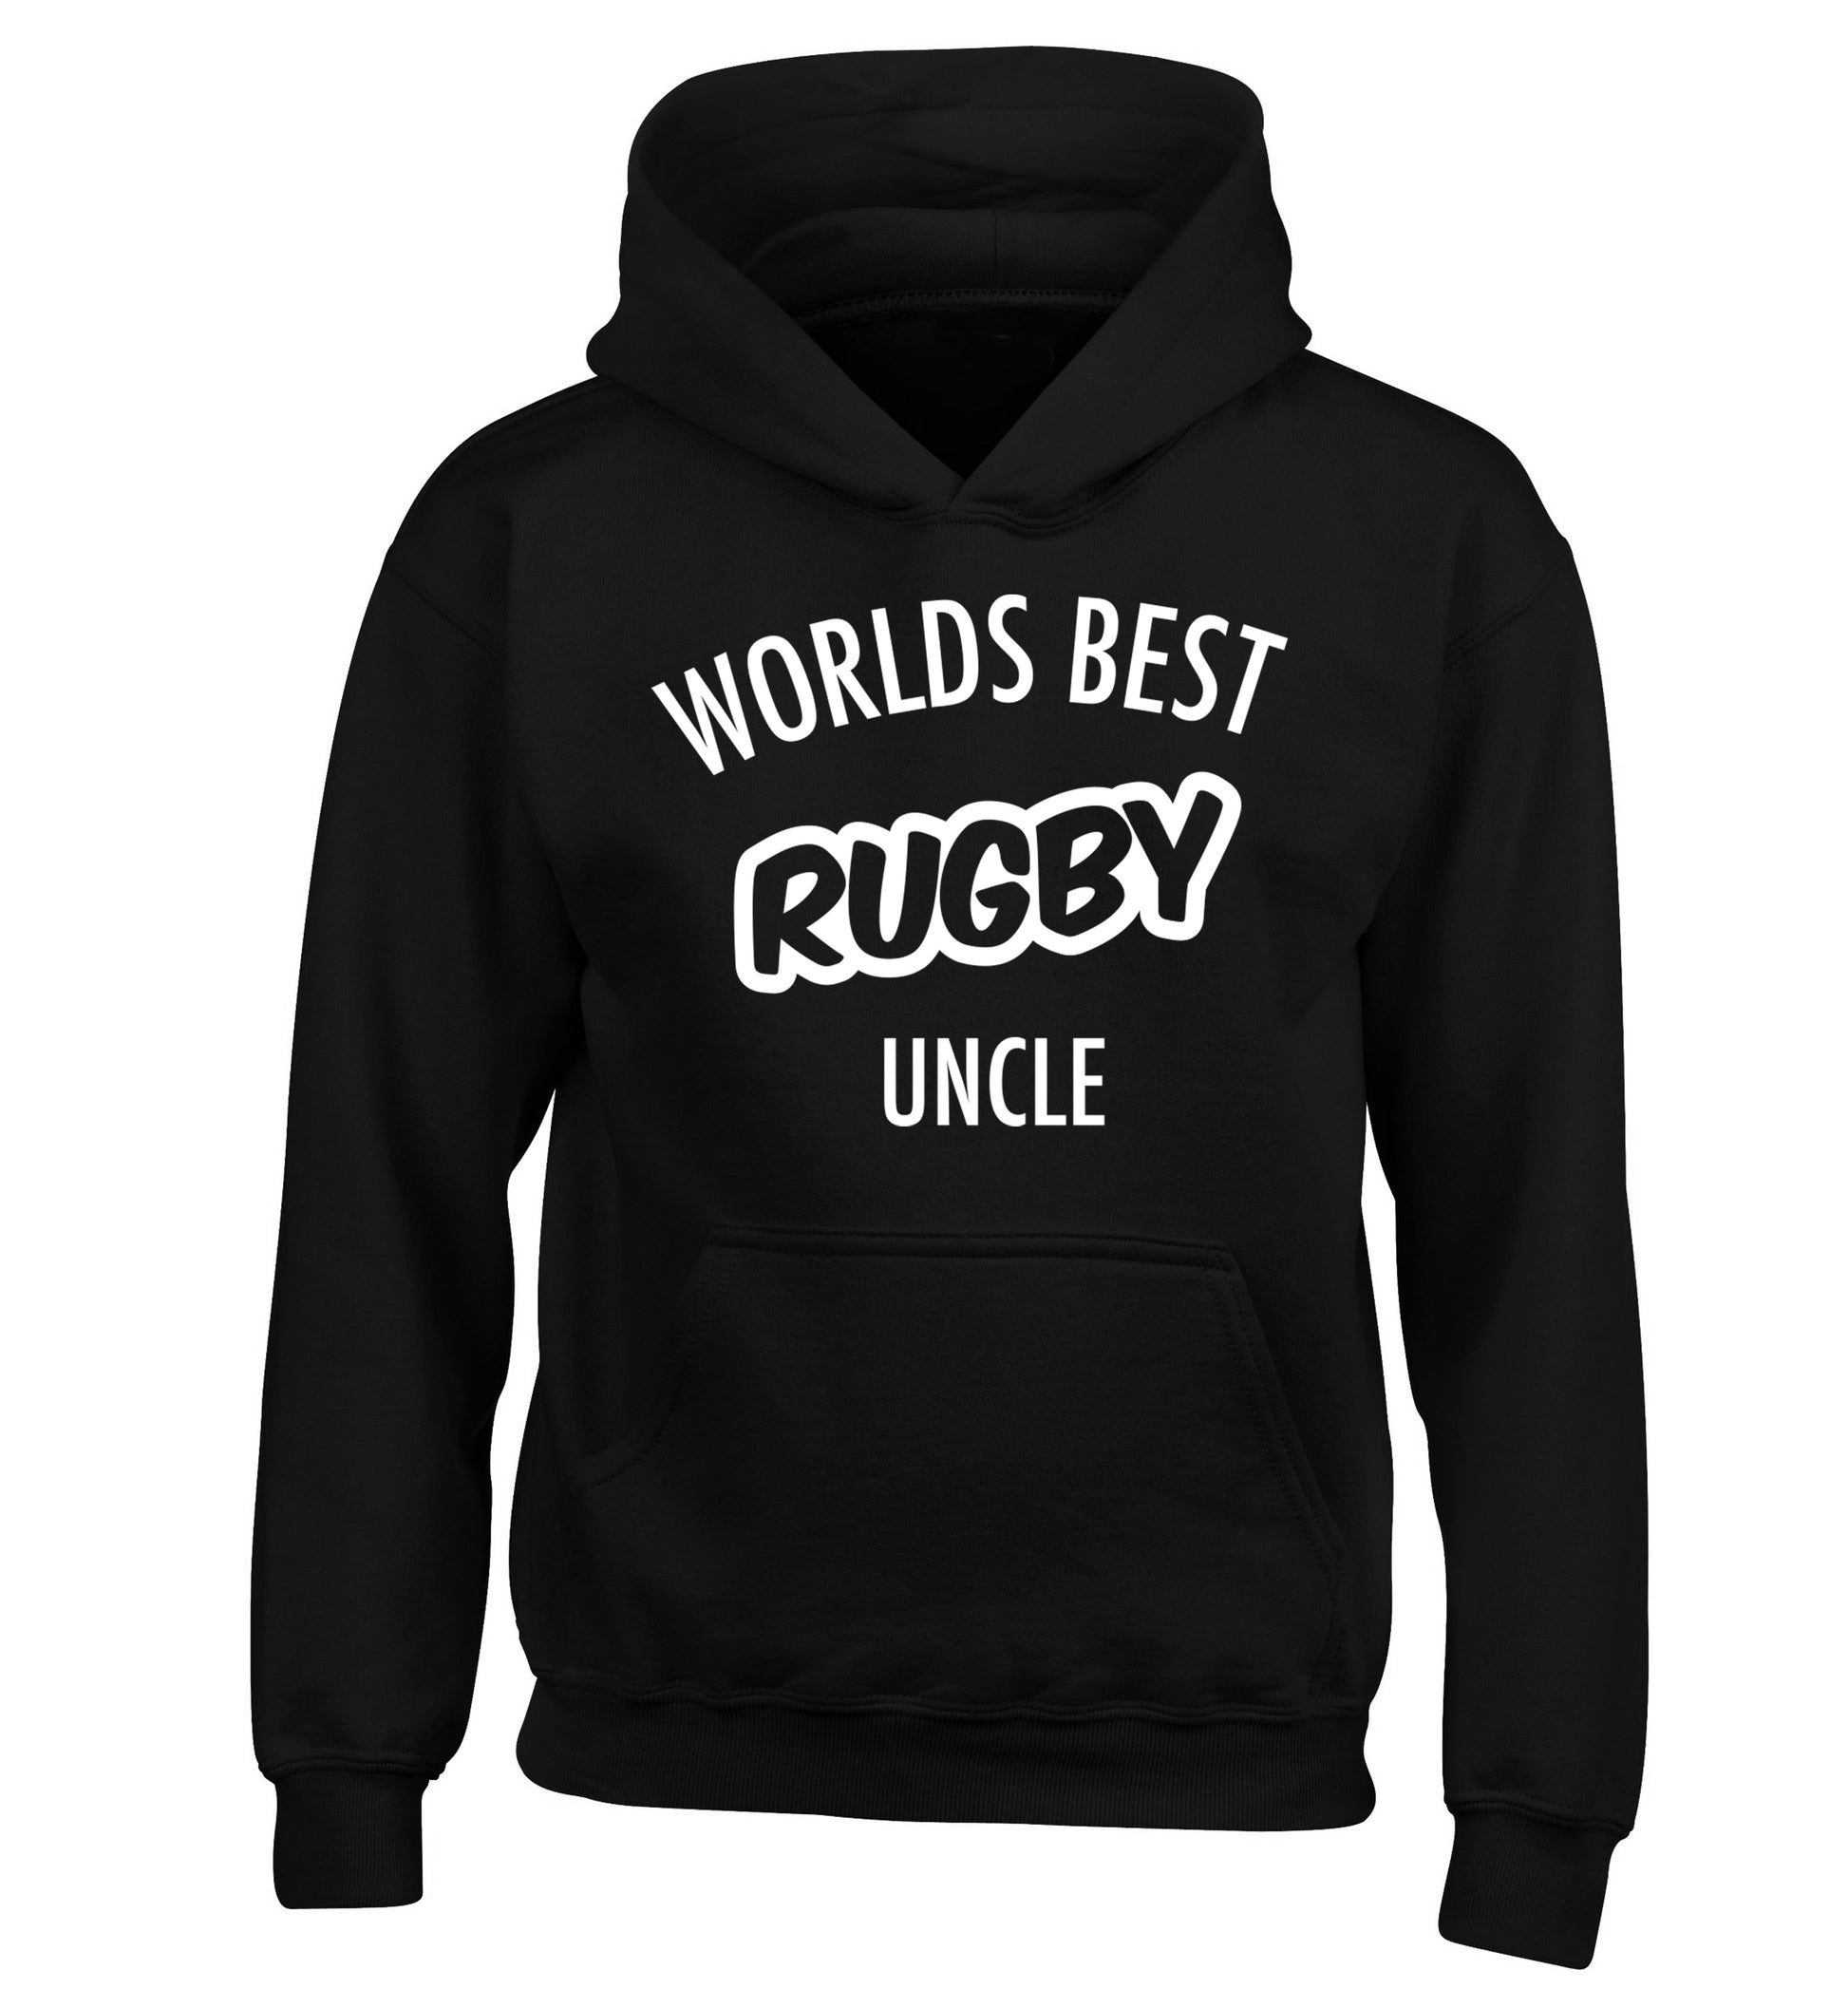 Worlds best rugby uncle children's black hoodie 12-13 Years